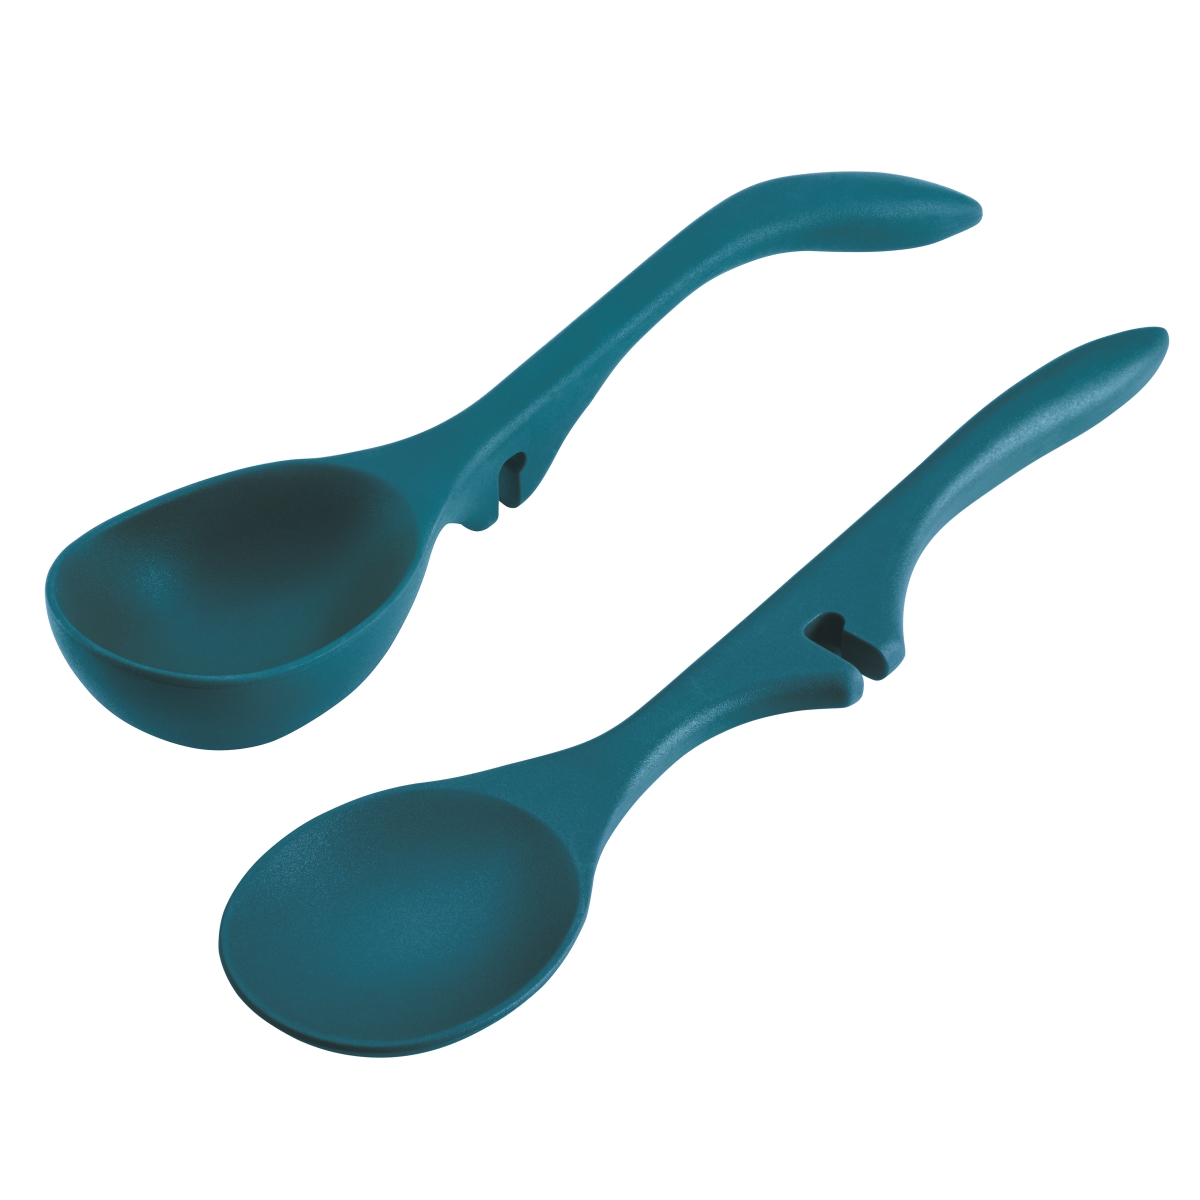 46834 Nonstick Kitchen Tools & Gadgets Spoon Lazy Ladle Set, Marine Blue - 2 Piece